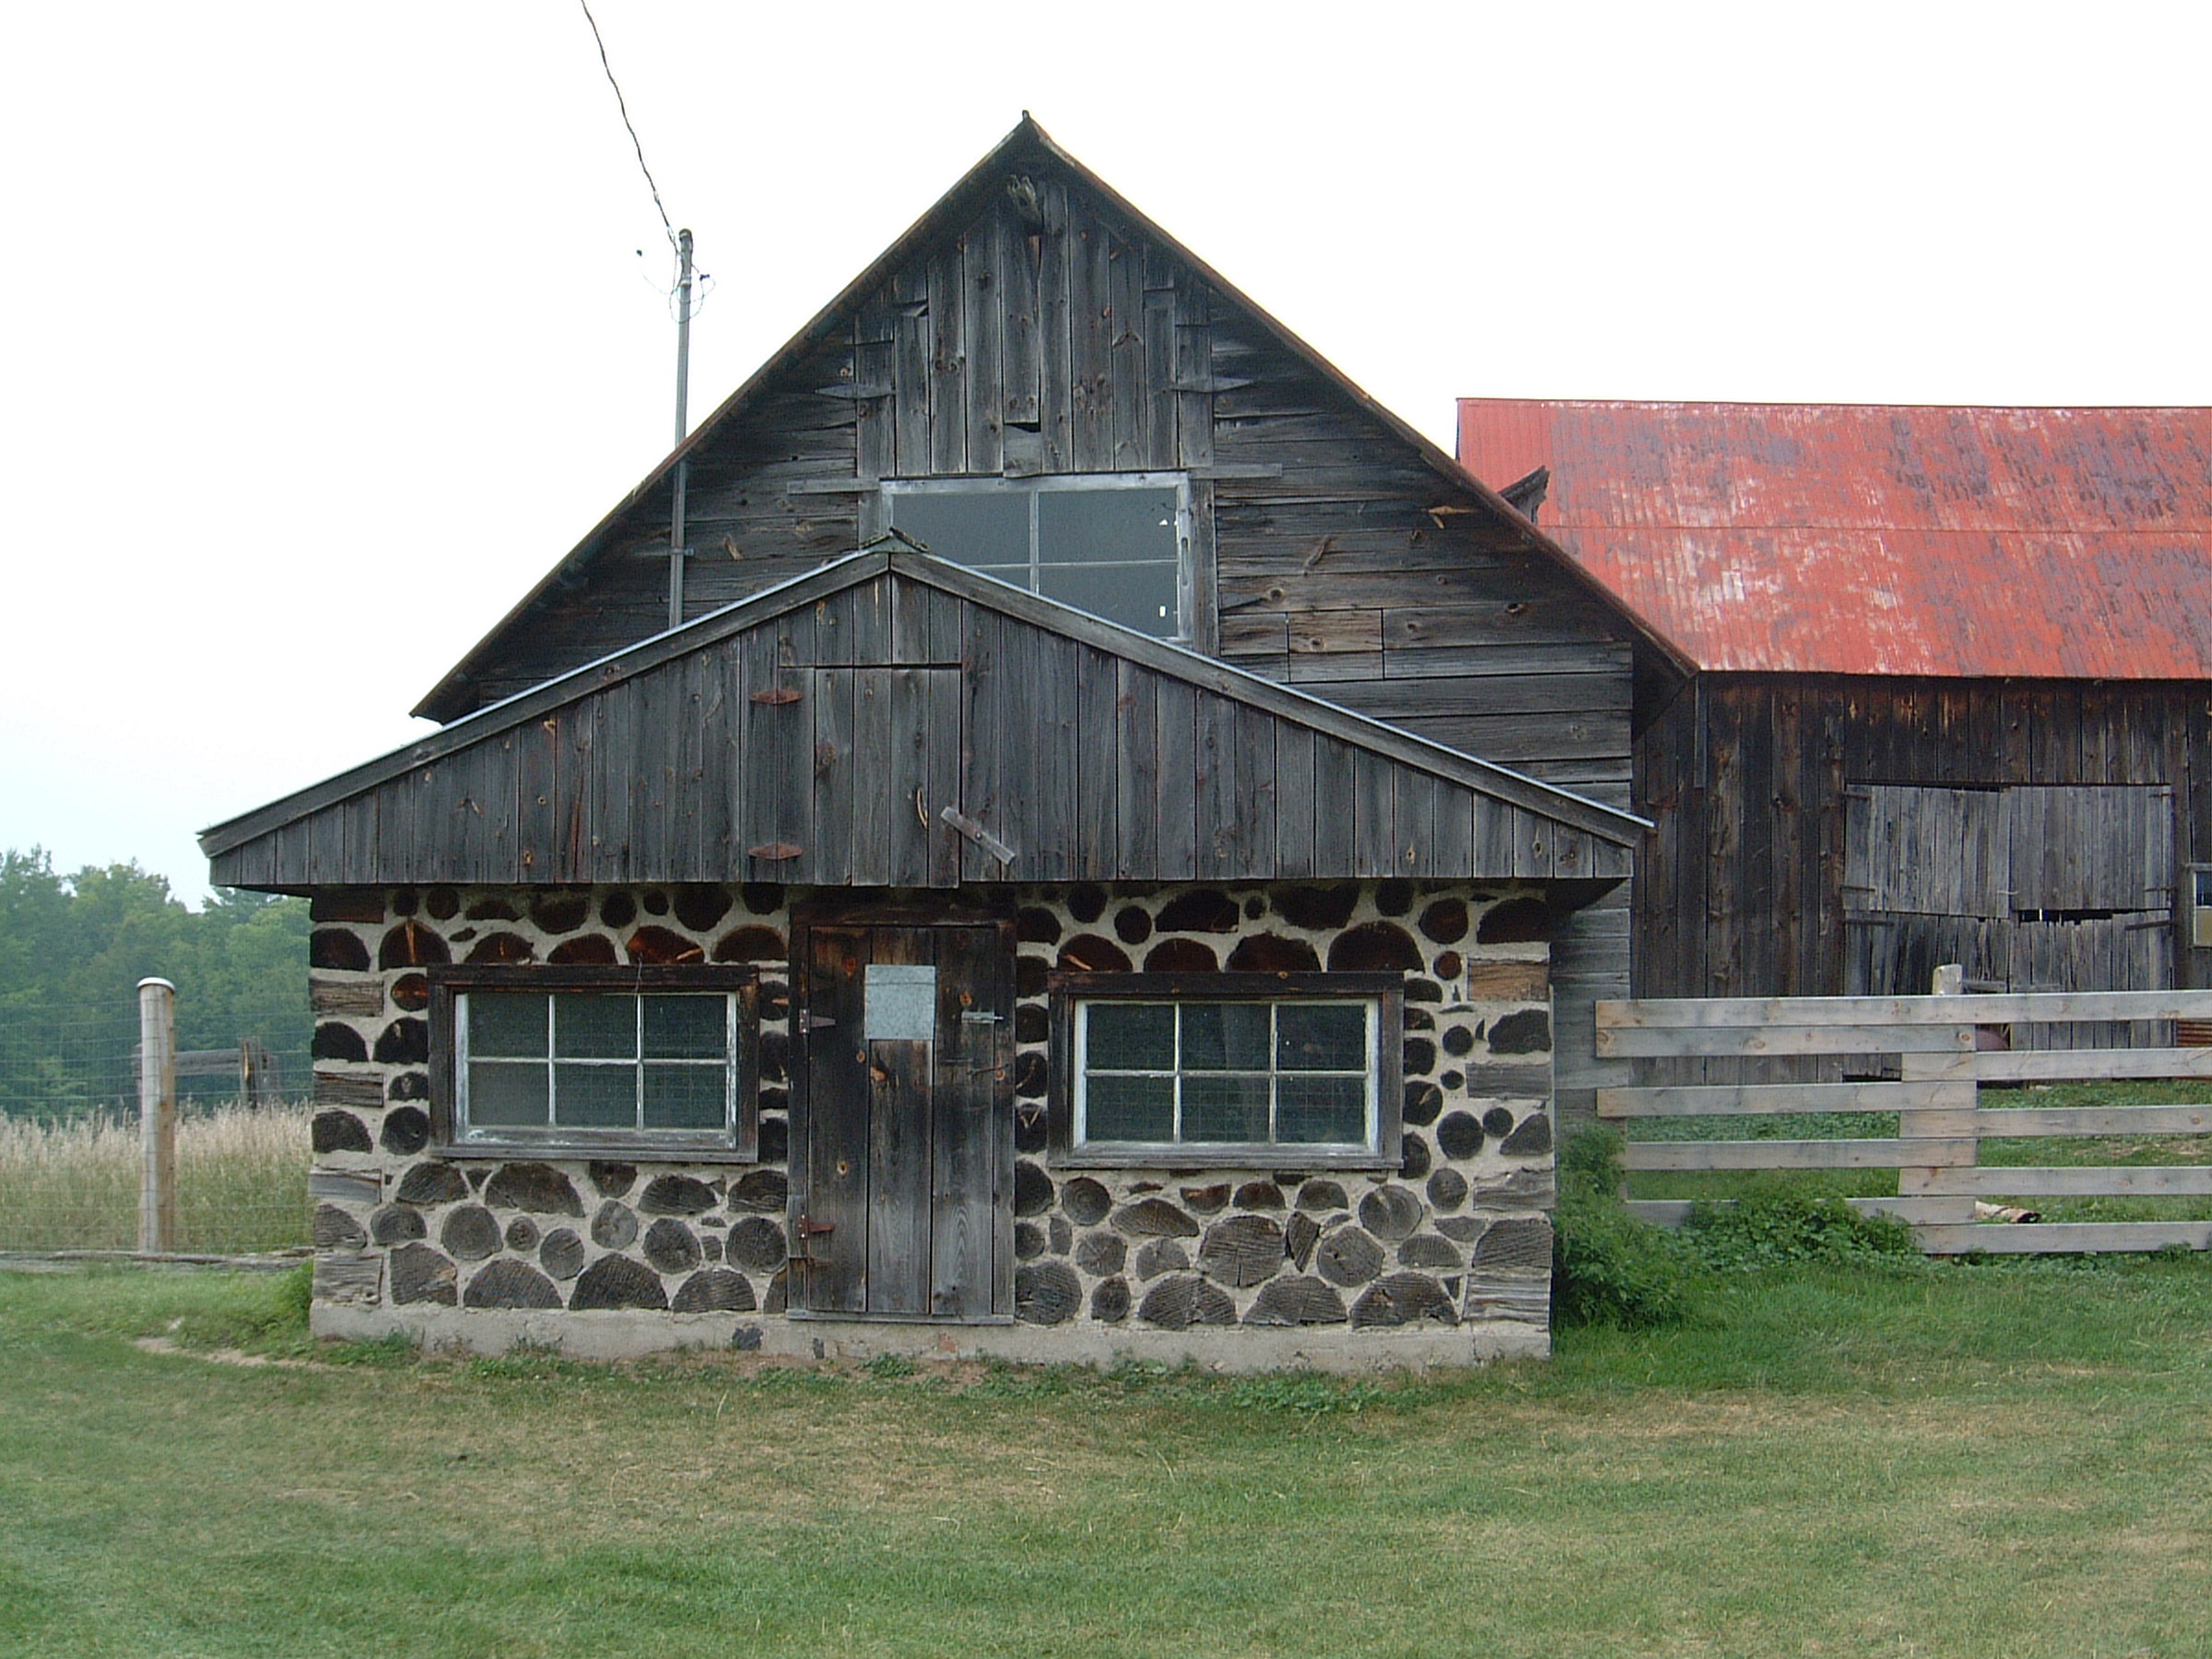 The Barn of John Stewart's farm at White Lake, Ontario